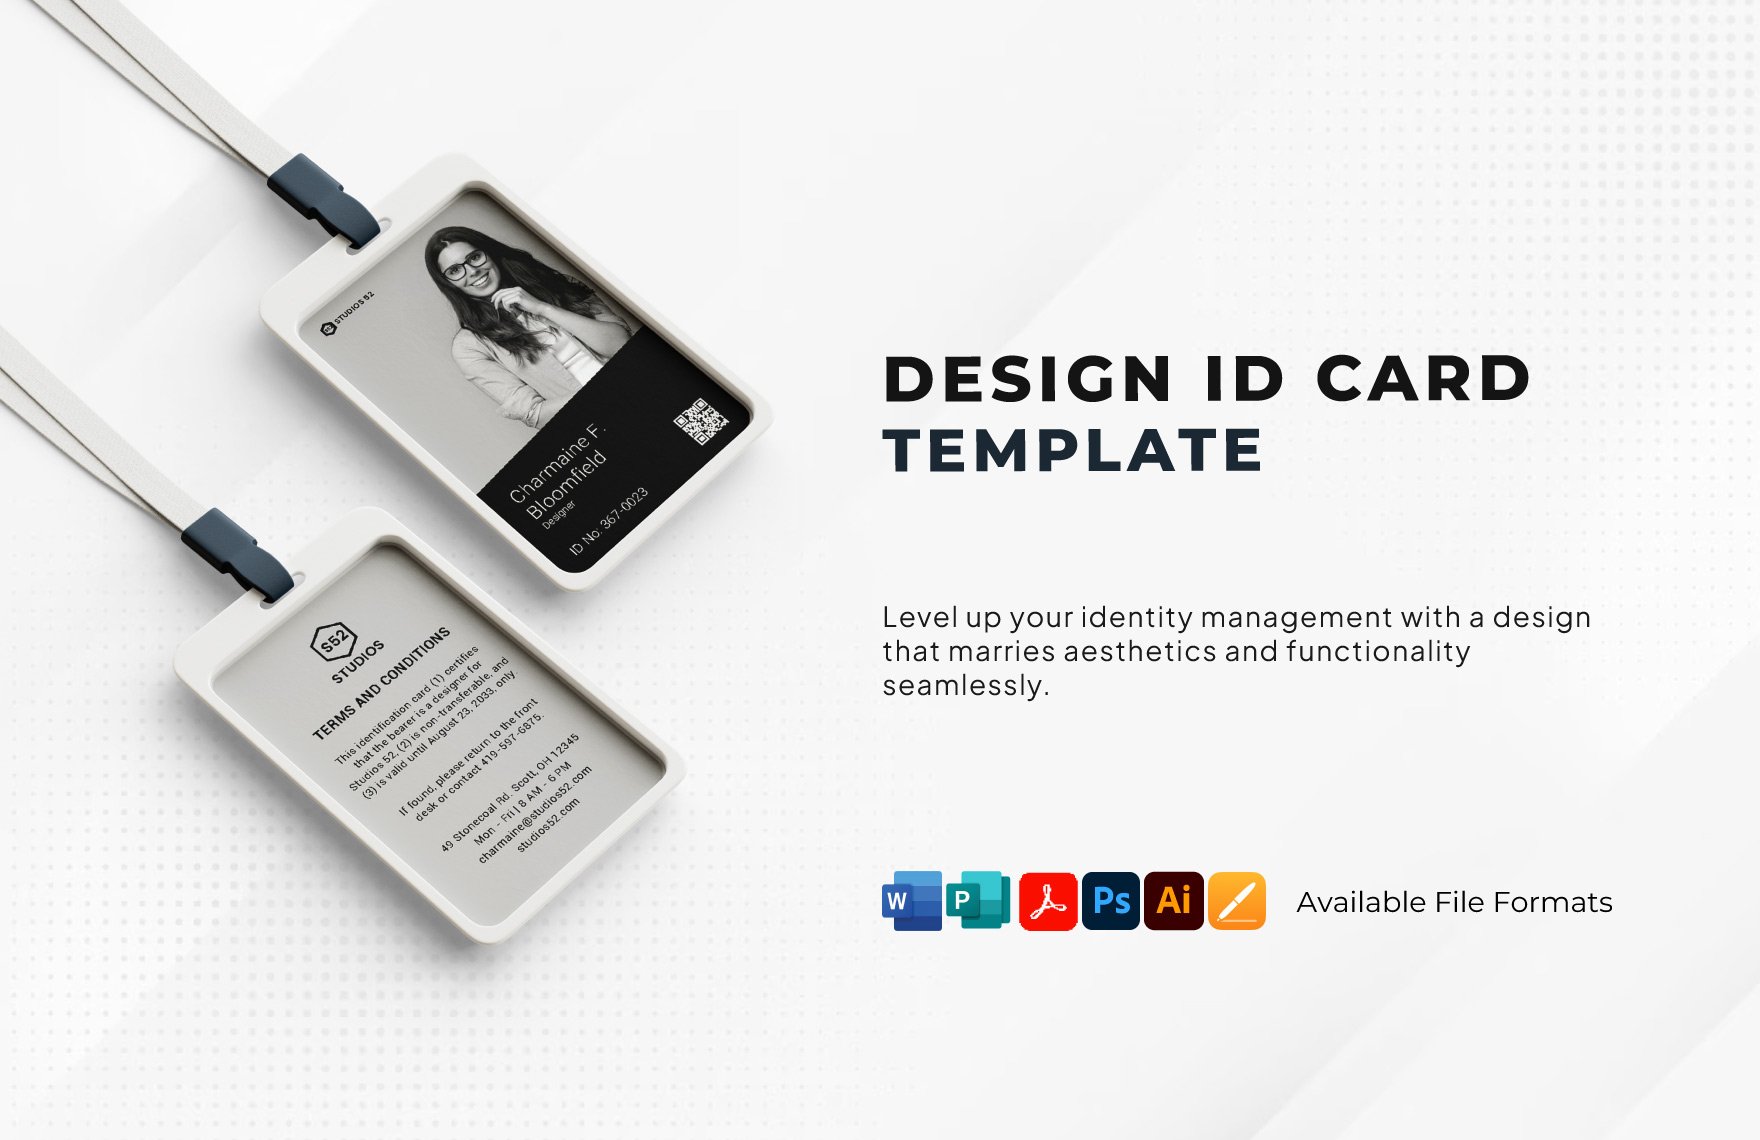 Design ID Card Template